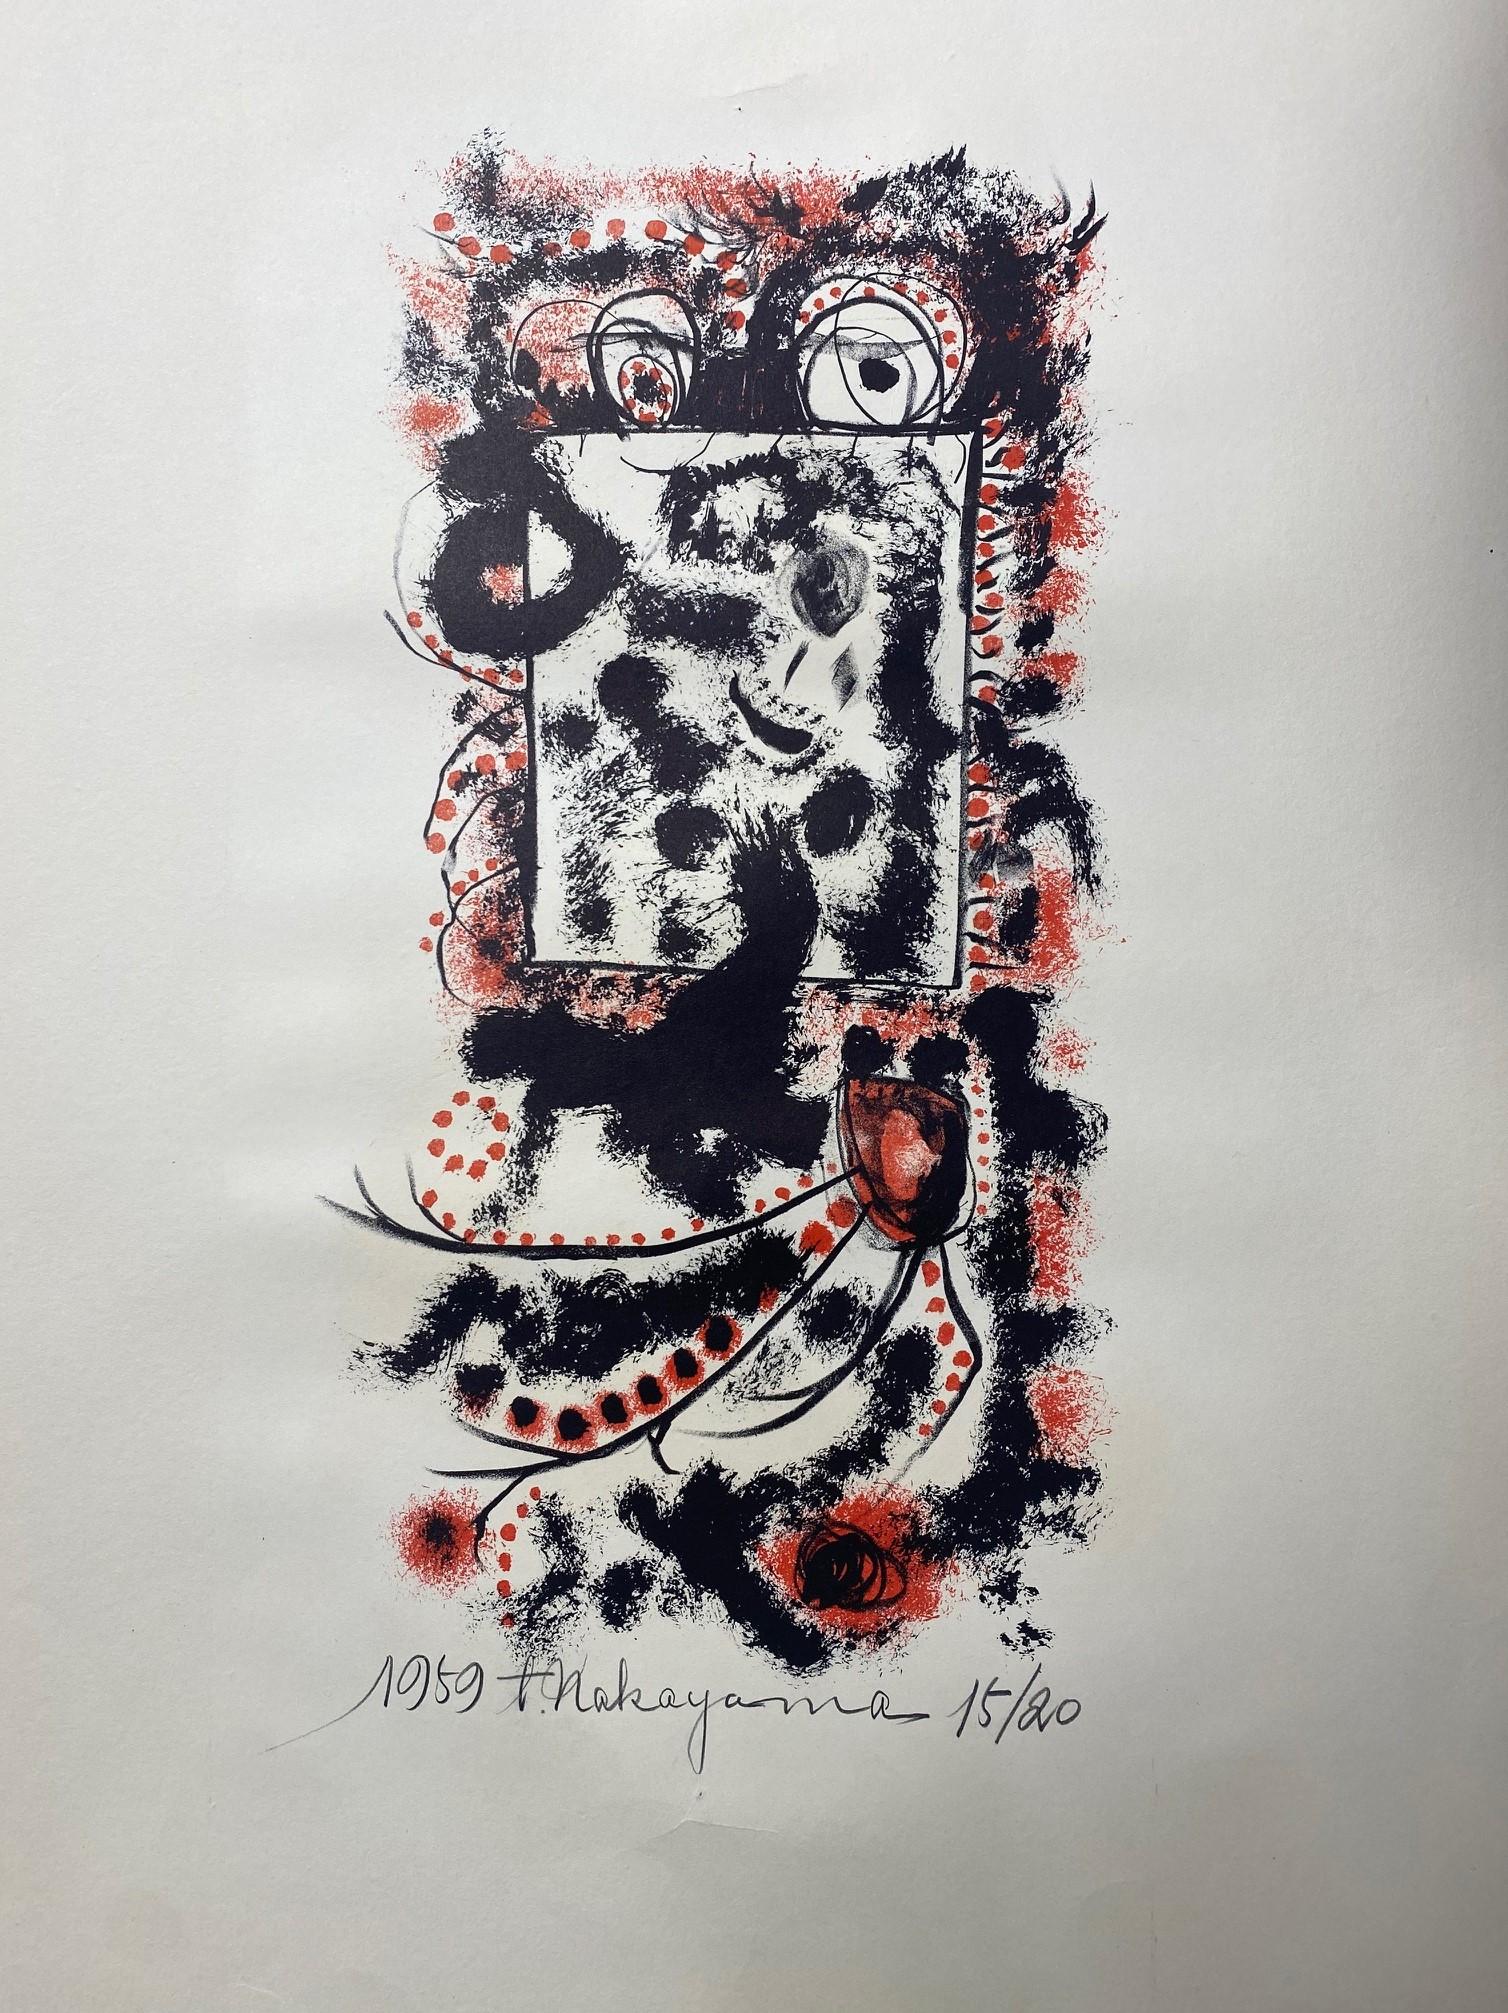 Showa Tadashi Nakayama Signed Early Limited Edition Japanese Abstract Print, 1959